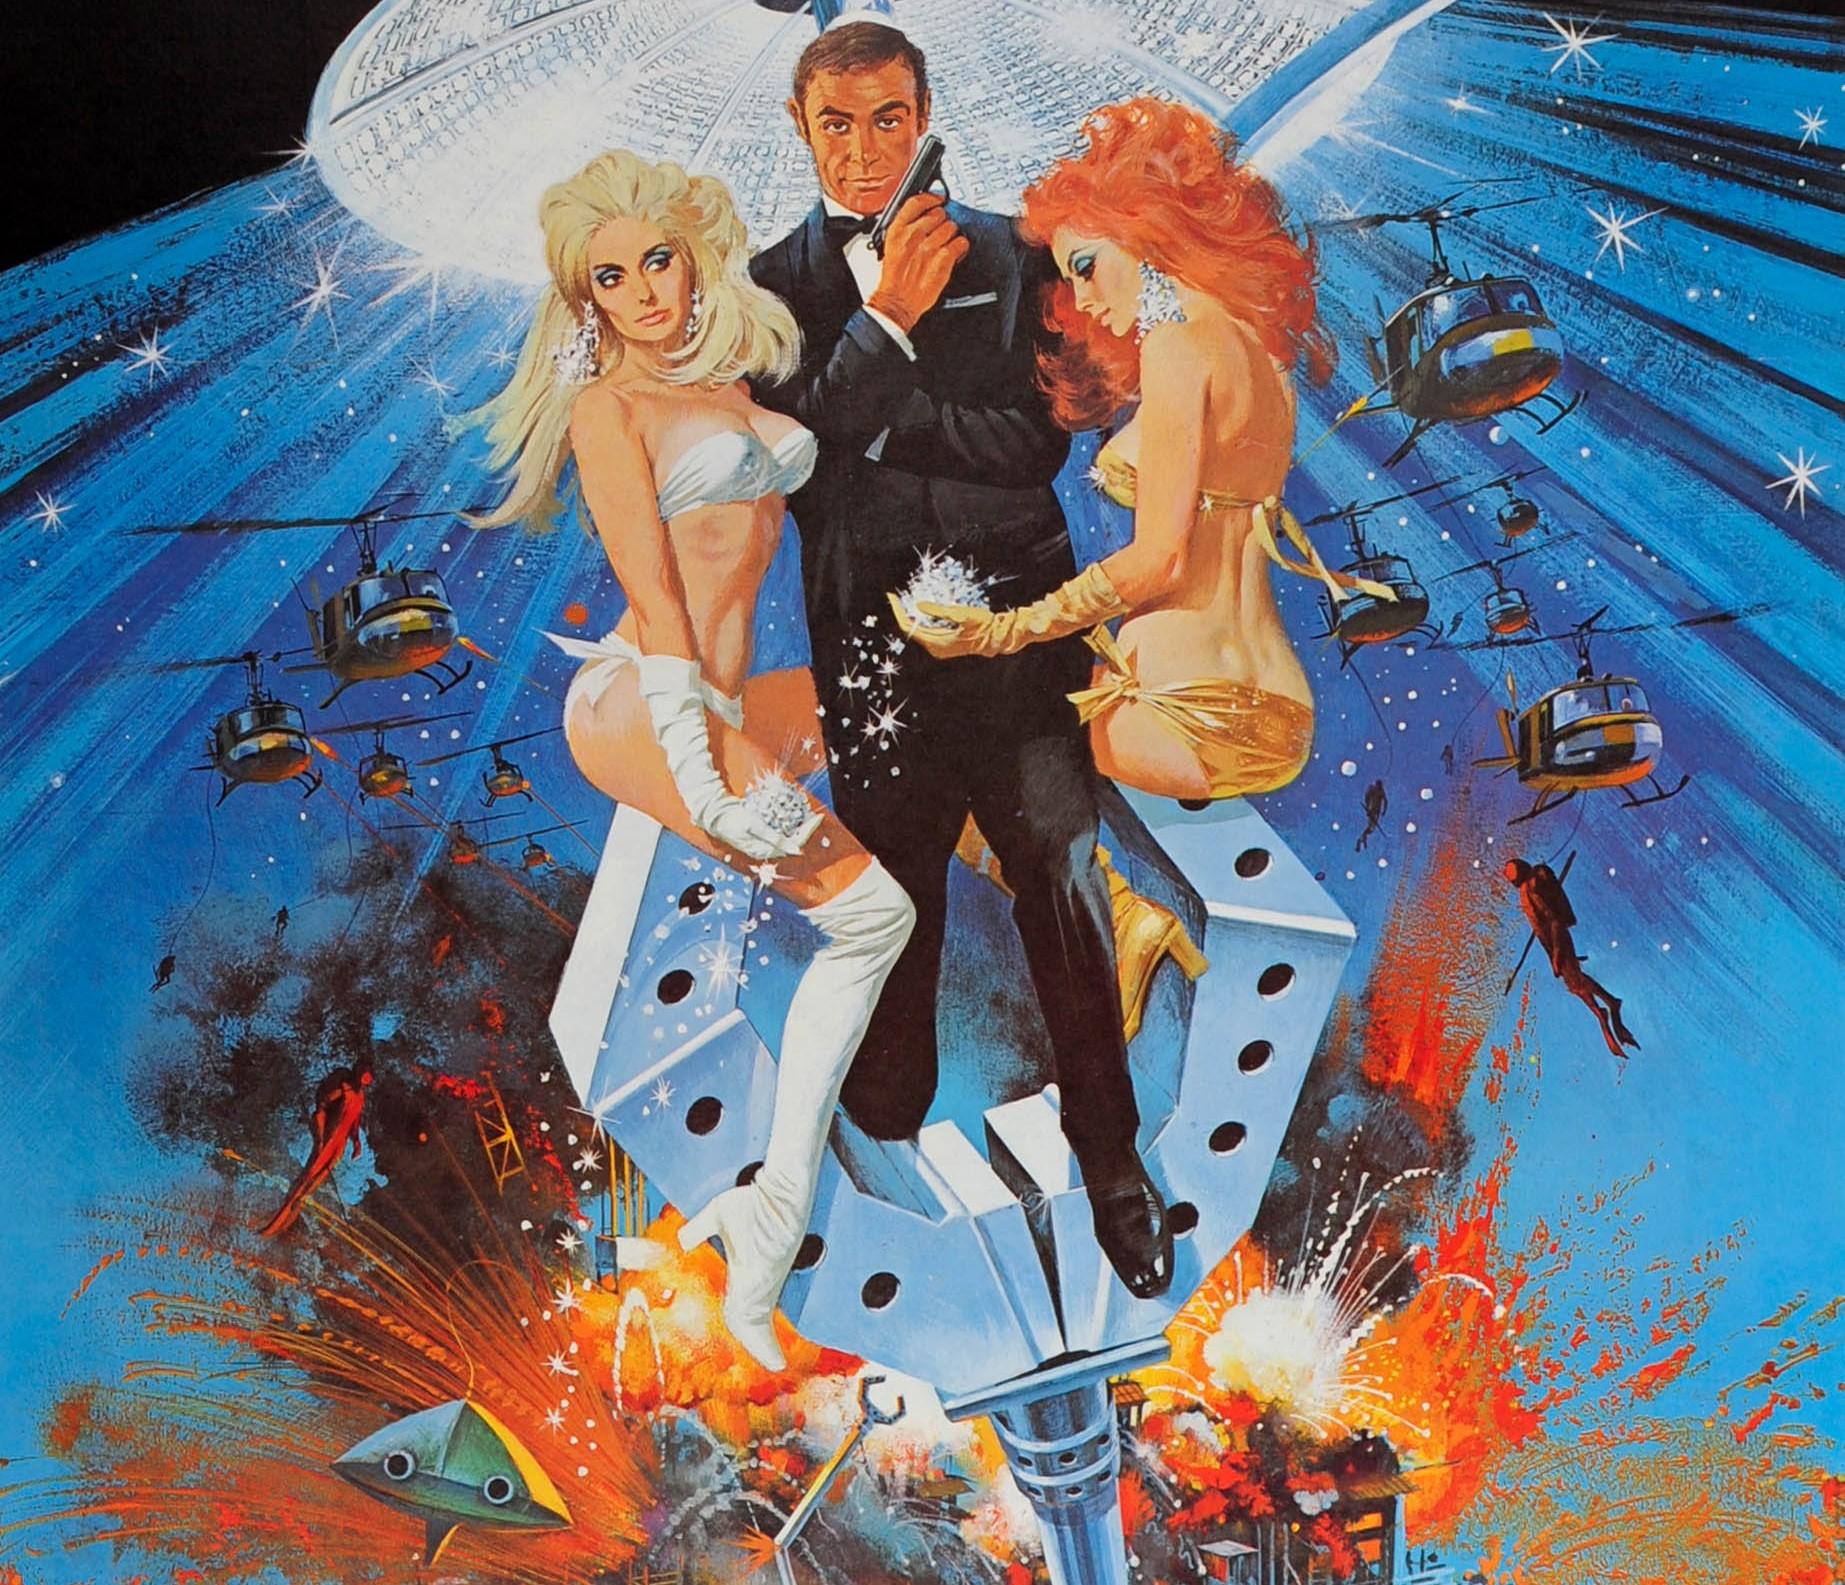 Große Original Vintage Classic 007 James Bond Film Poster Diamonds Are Forever (amerikanisch)